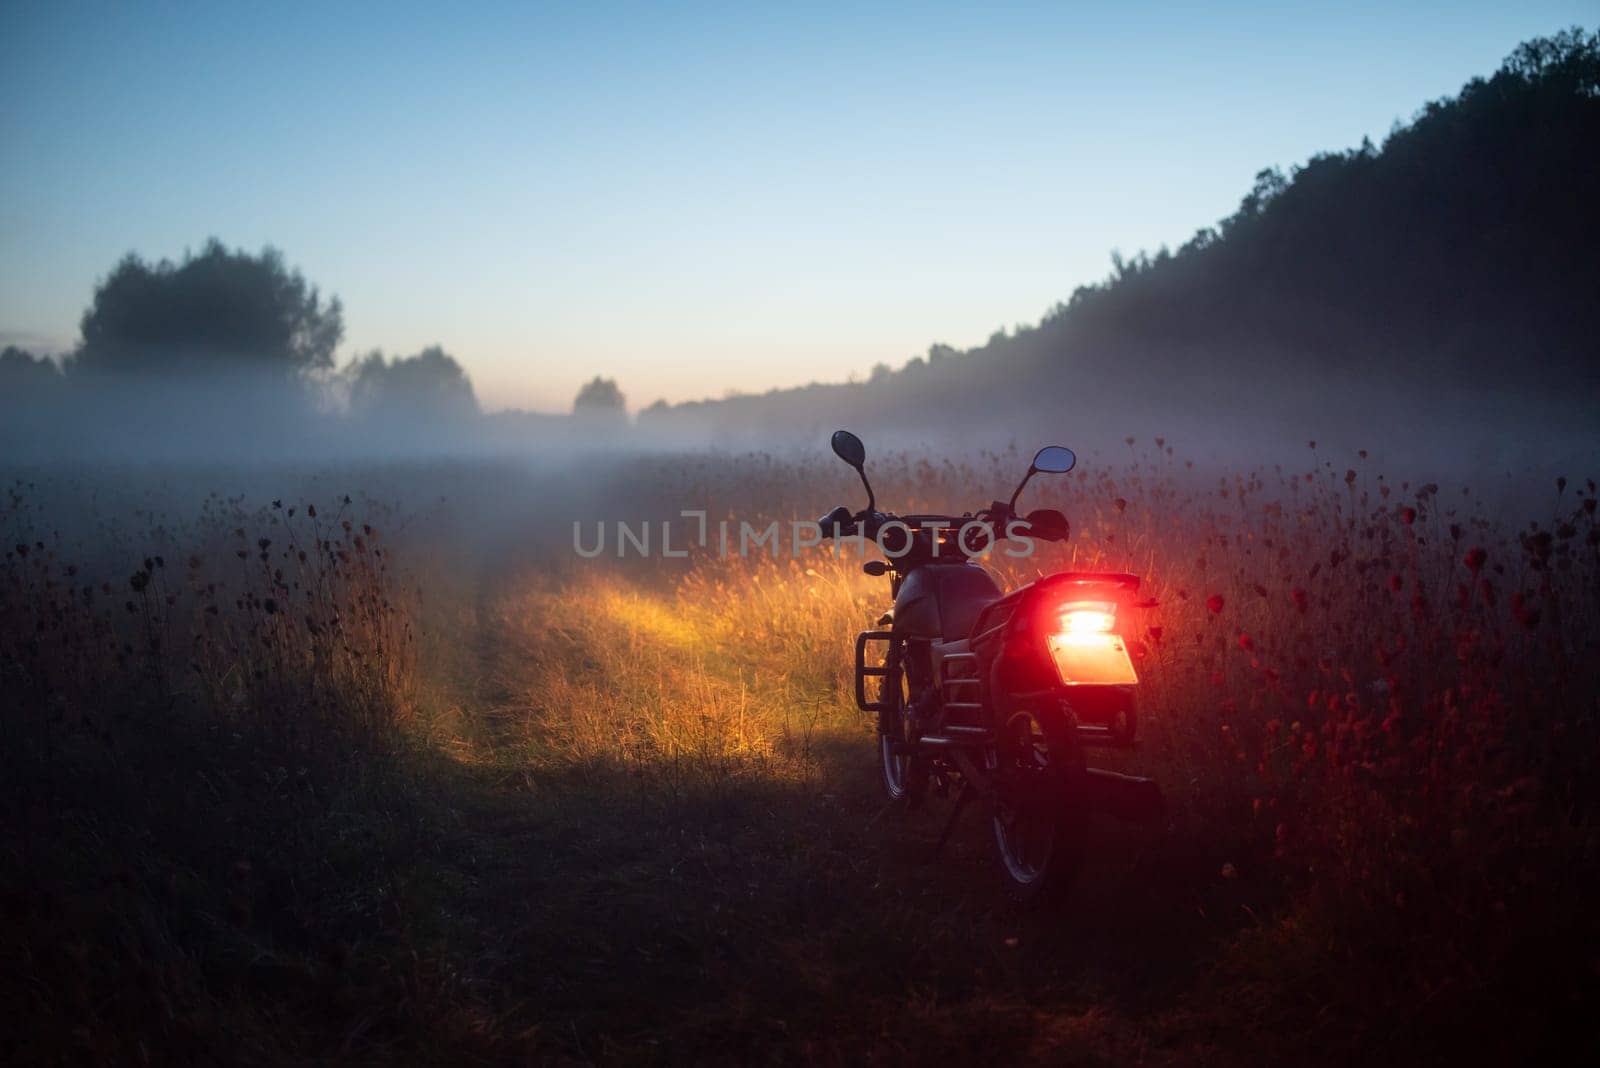 Bad visibility, driving motorbike on nature, romantic surrounding